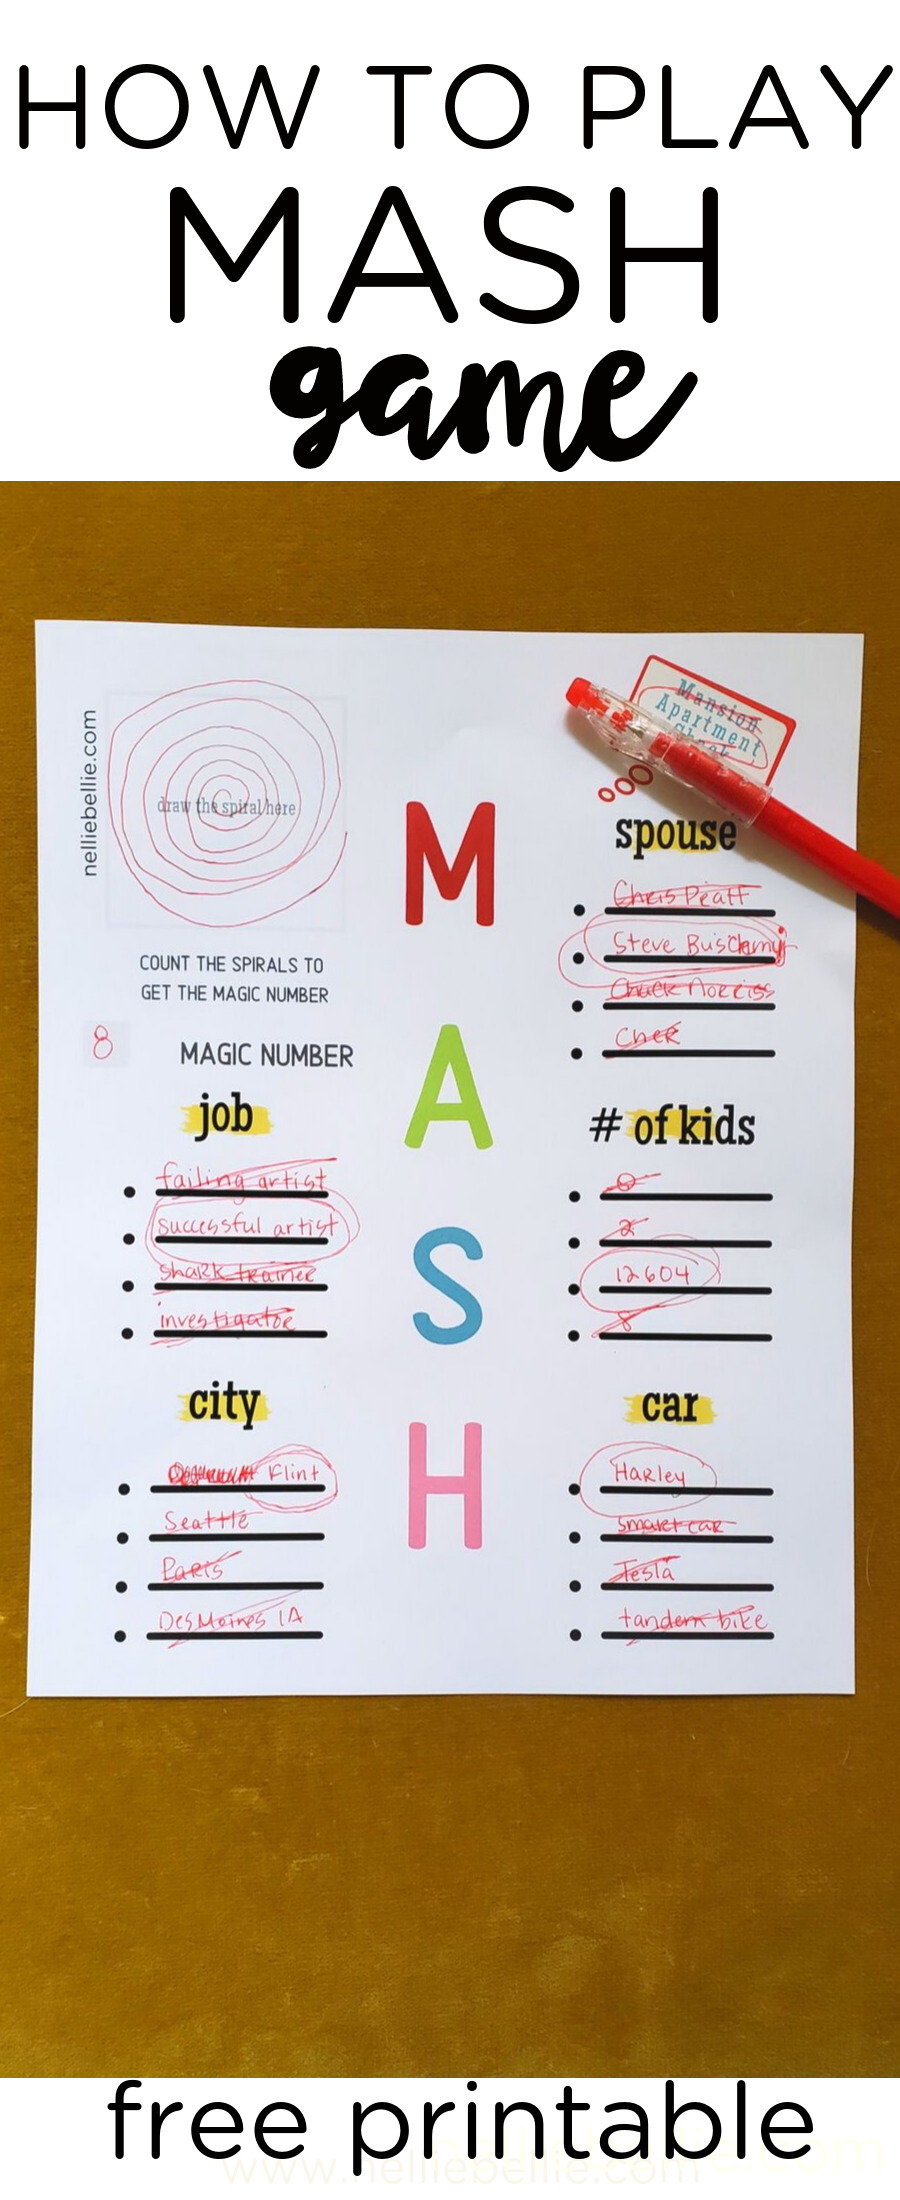 MASH GAME Mansion Apartment Shack House > free printable!